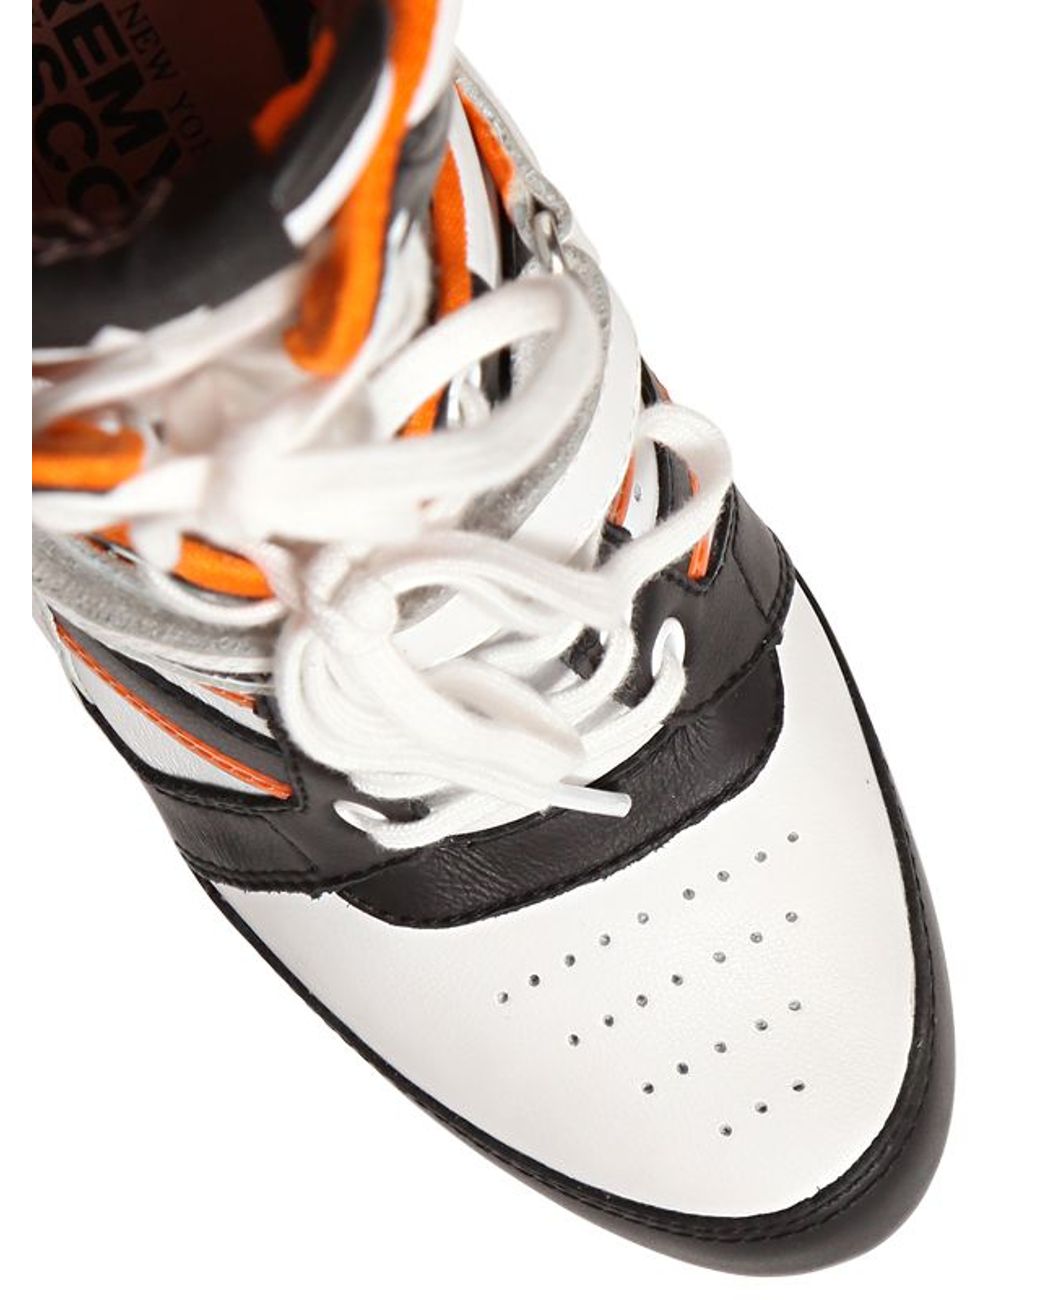 Digital Supply Waste Jeremy Scott for adidas 130mm Js High Heel Leather Boots in Orange | Lyst UK